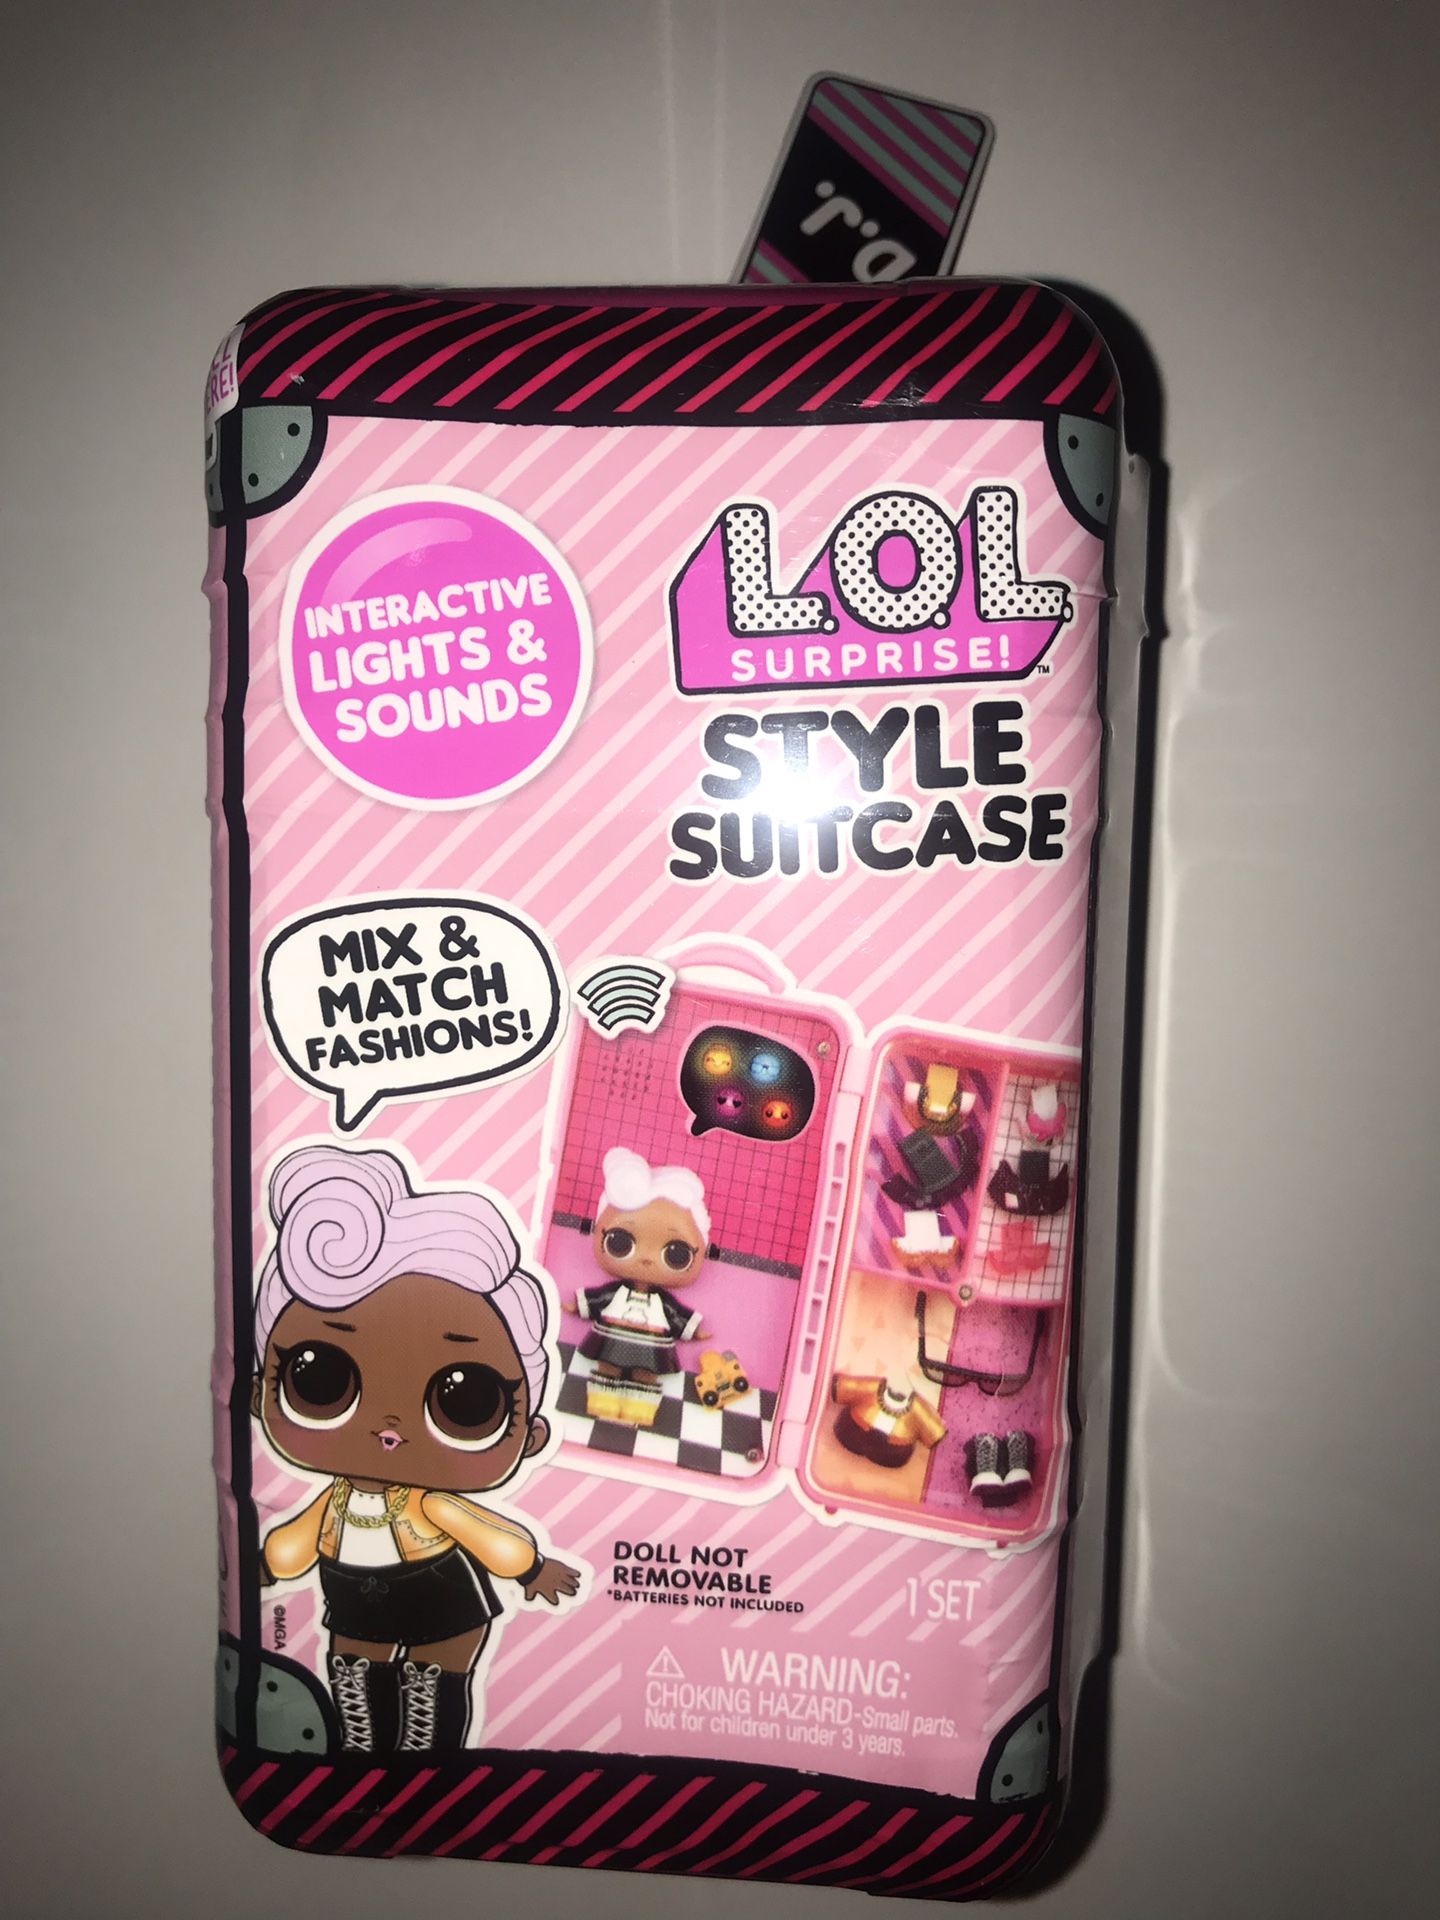 Lol surprise Style Suitcase “DJ”